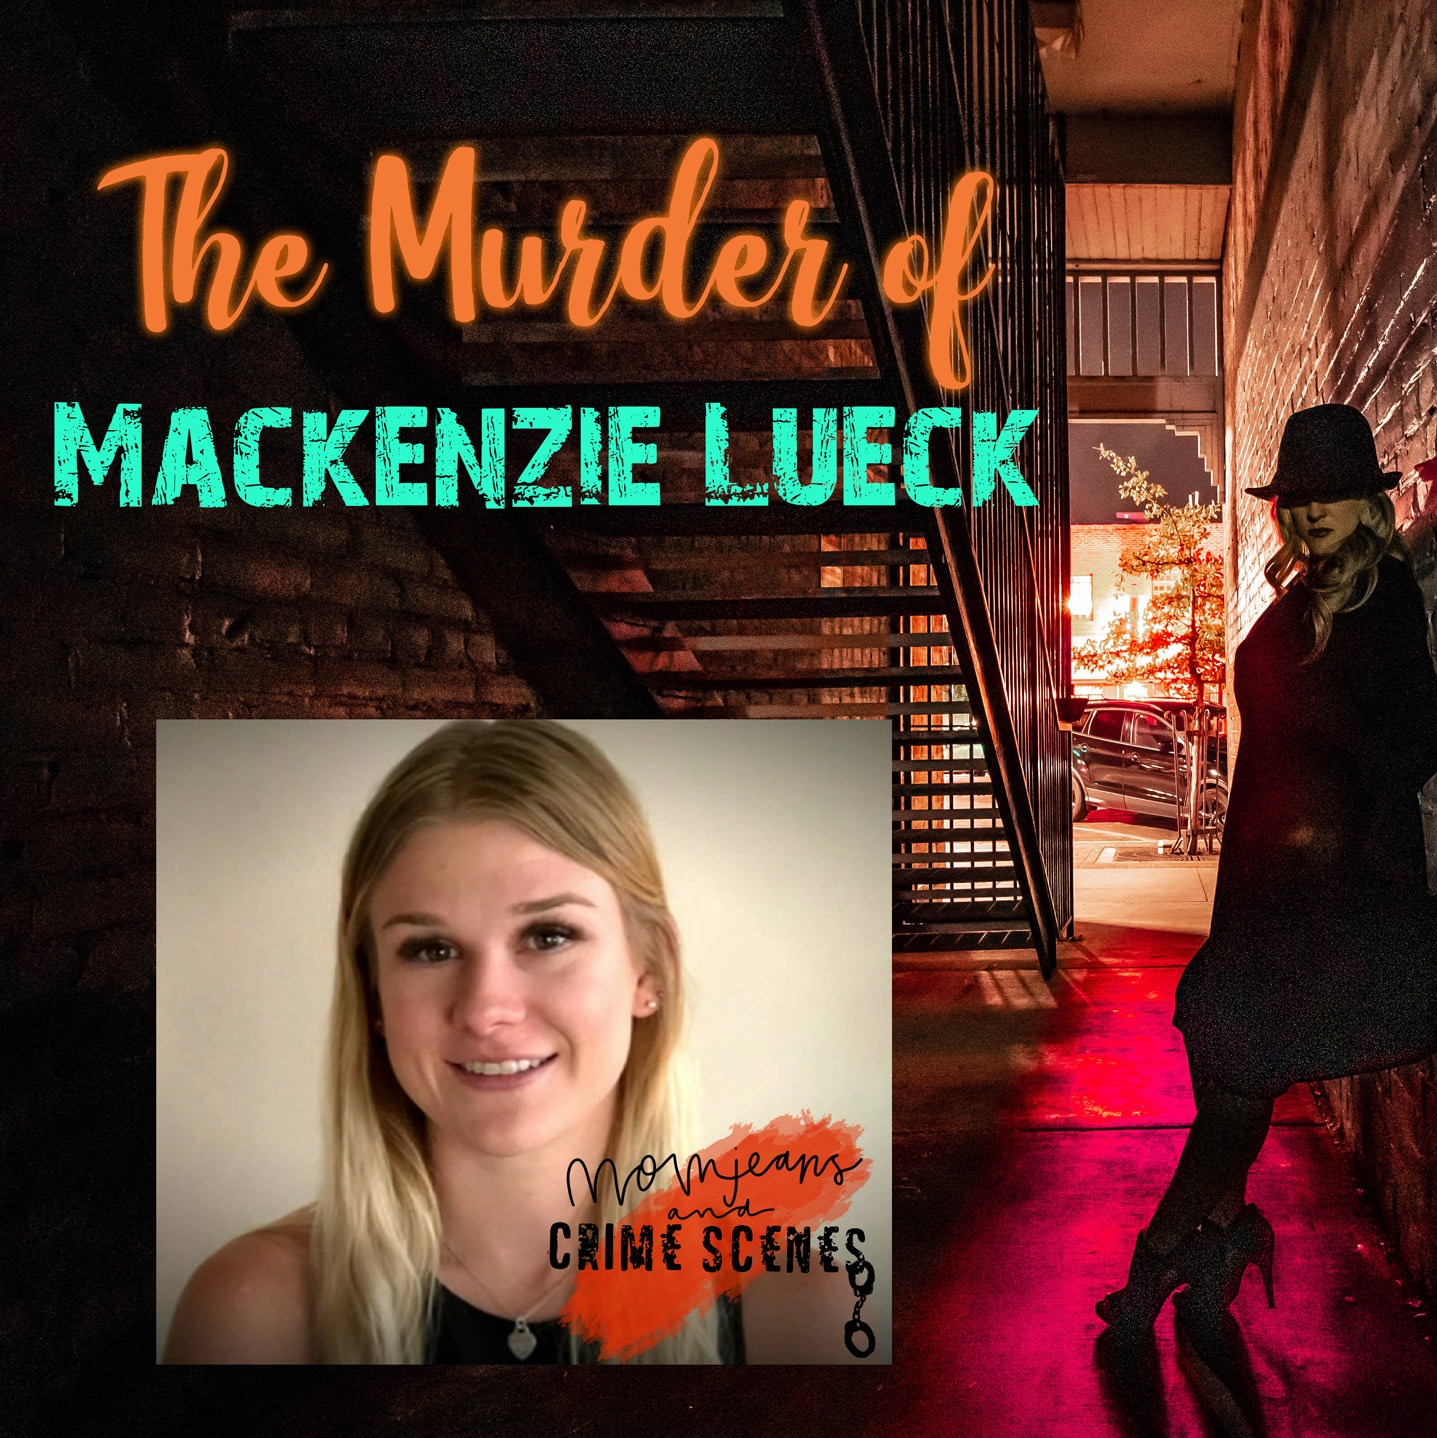 The murder of Mackenzie Lueck